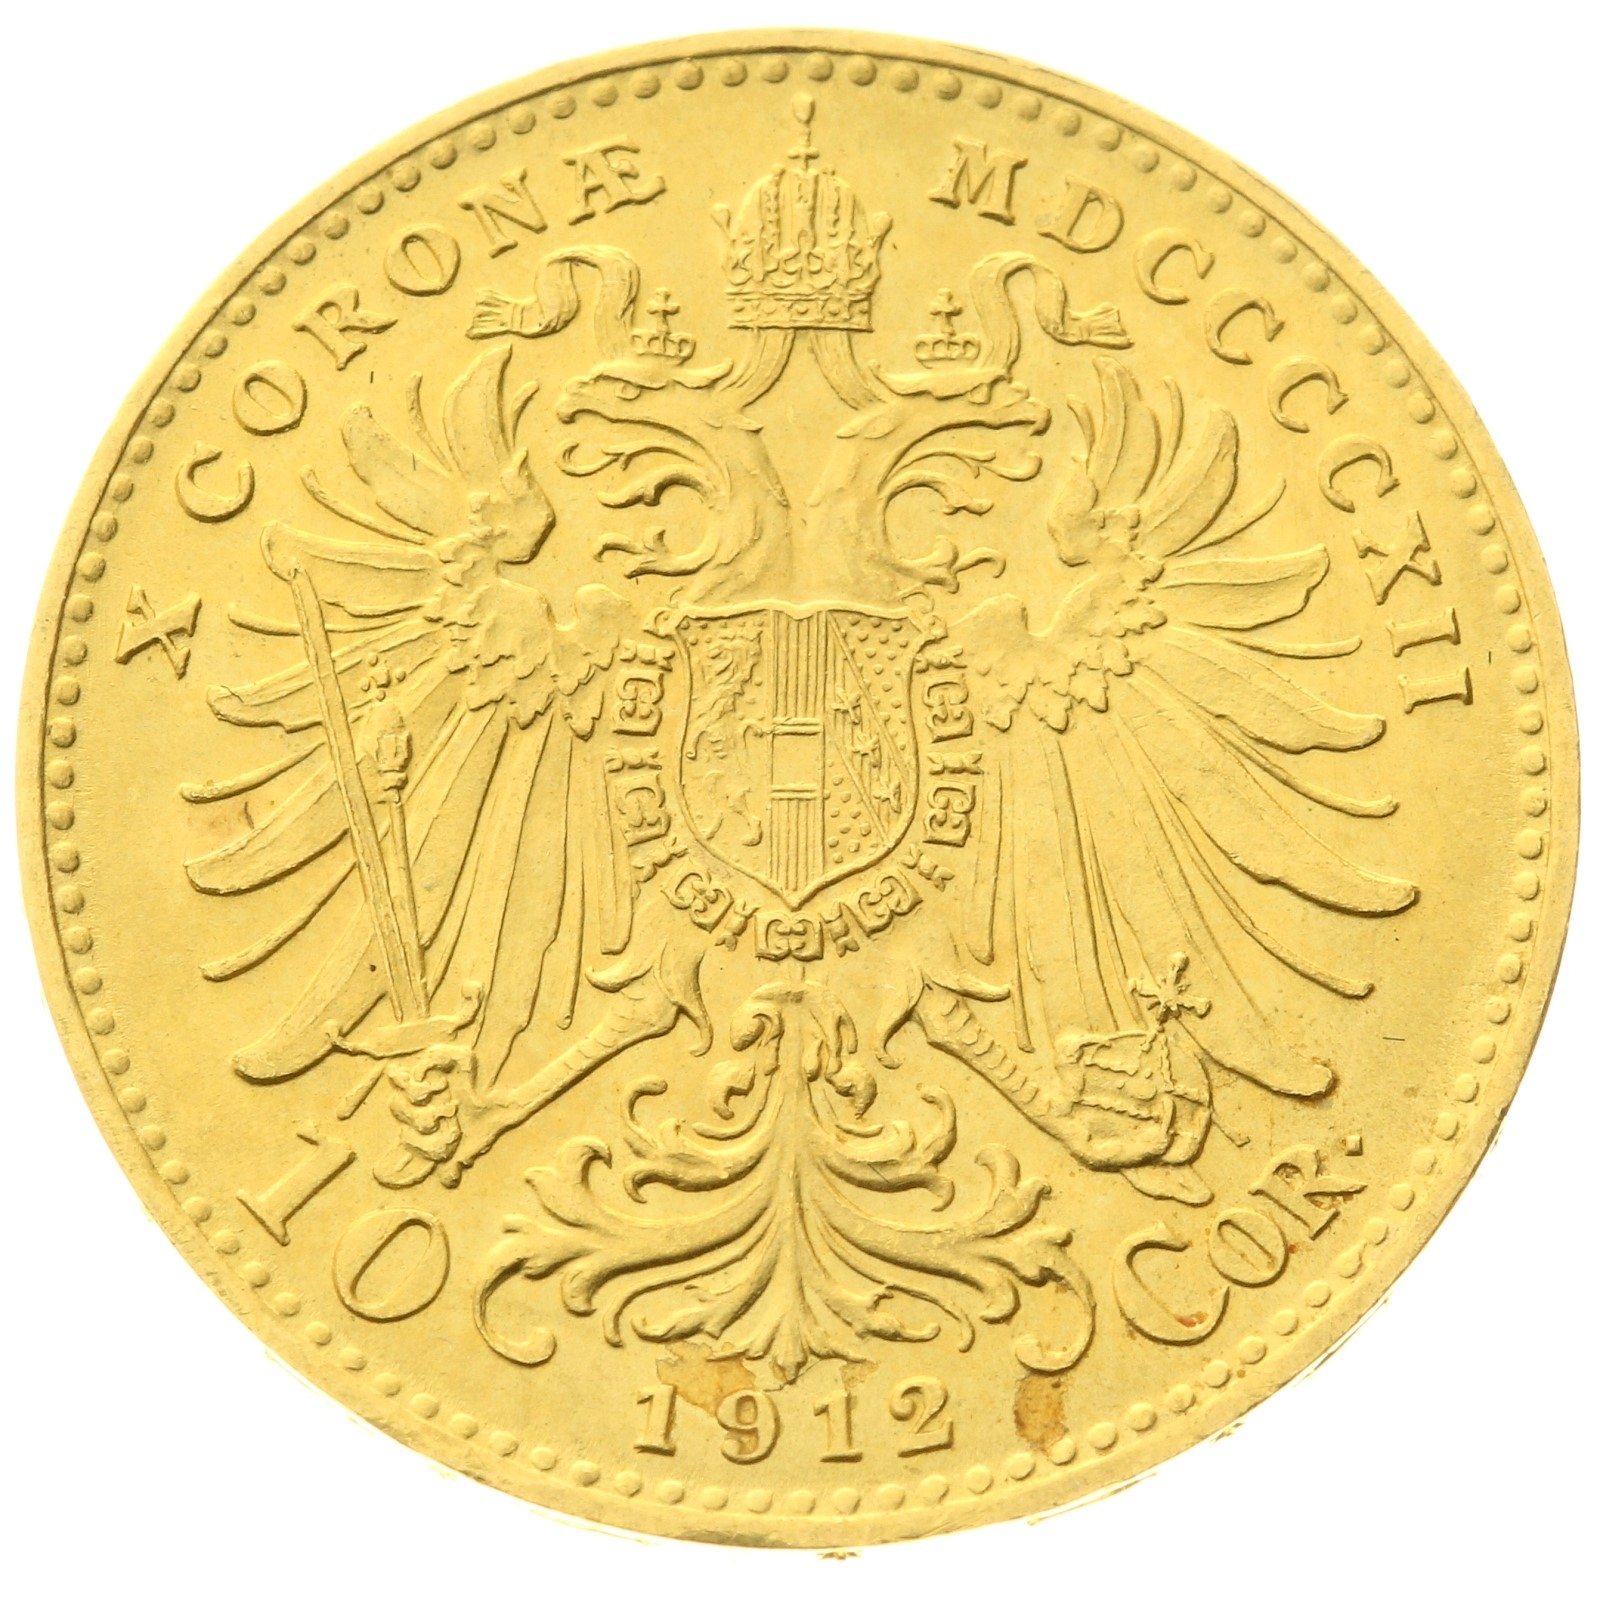 Austria - 10 corona - 1912 - RESTRIKE